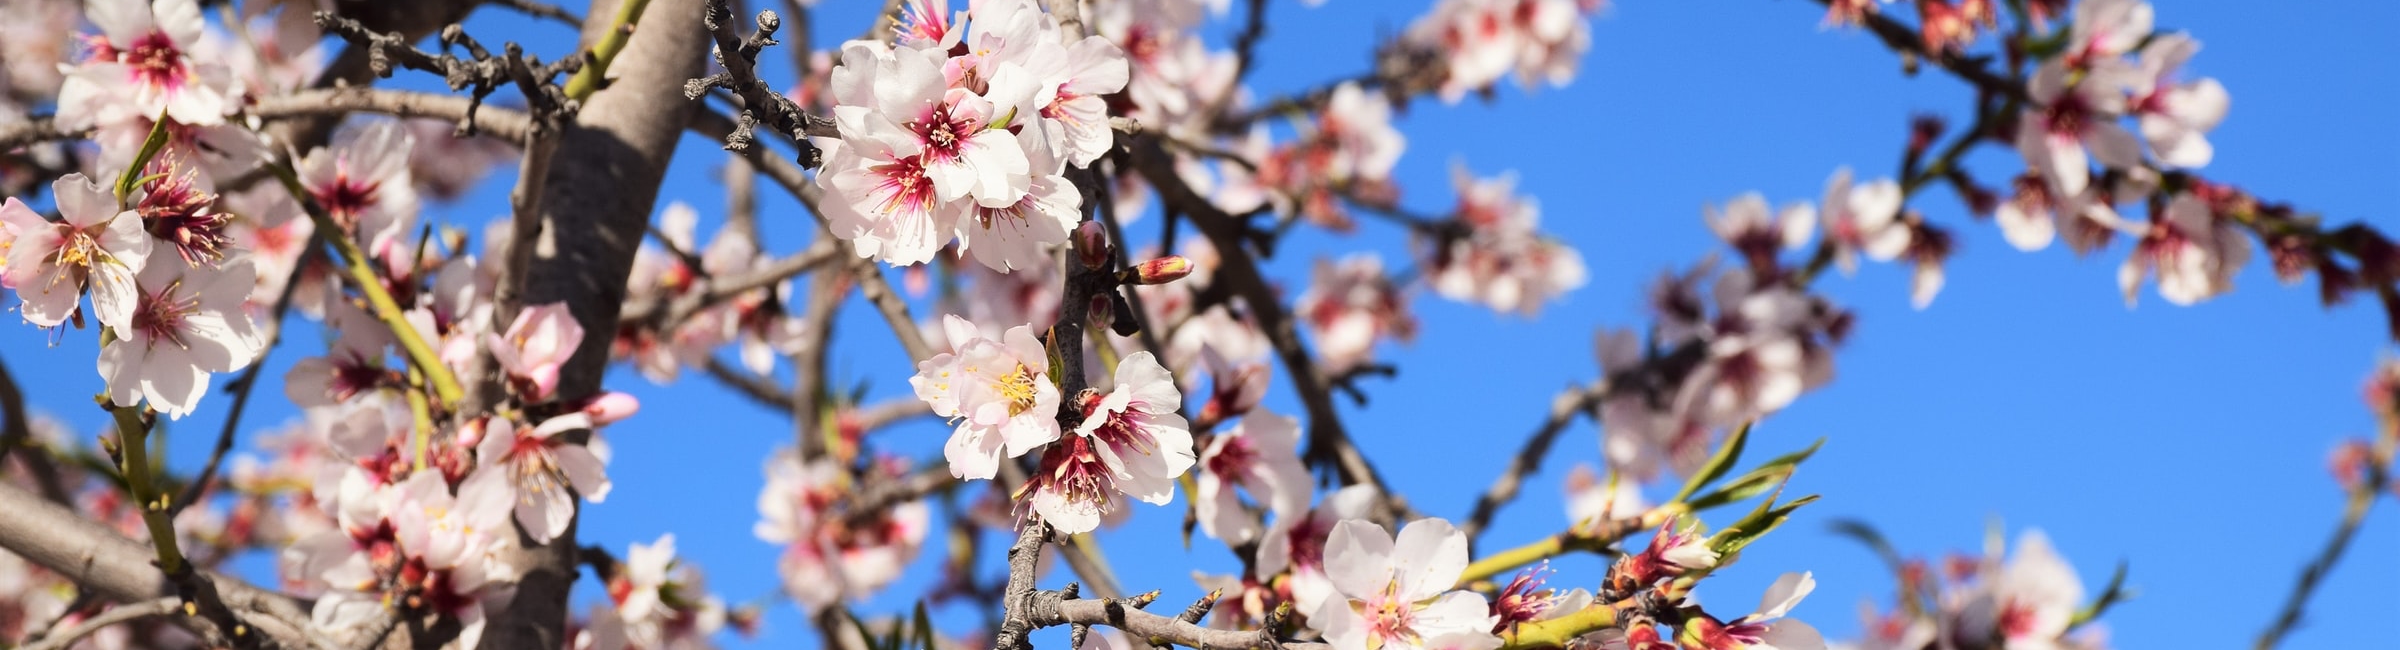 almond blossom on tree